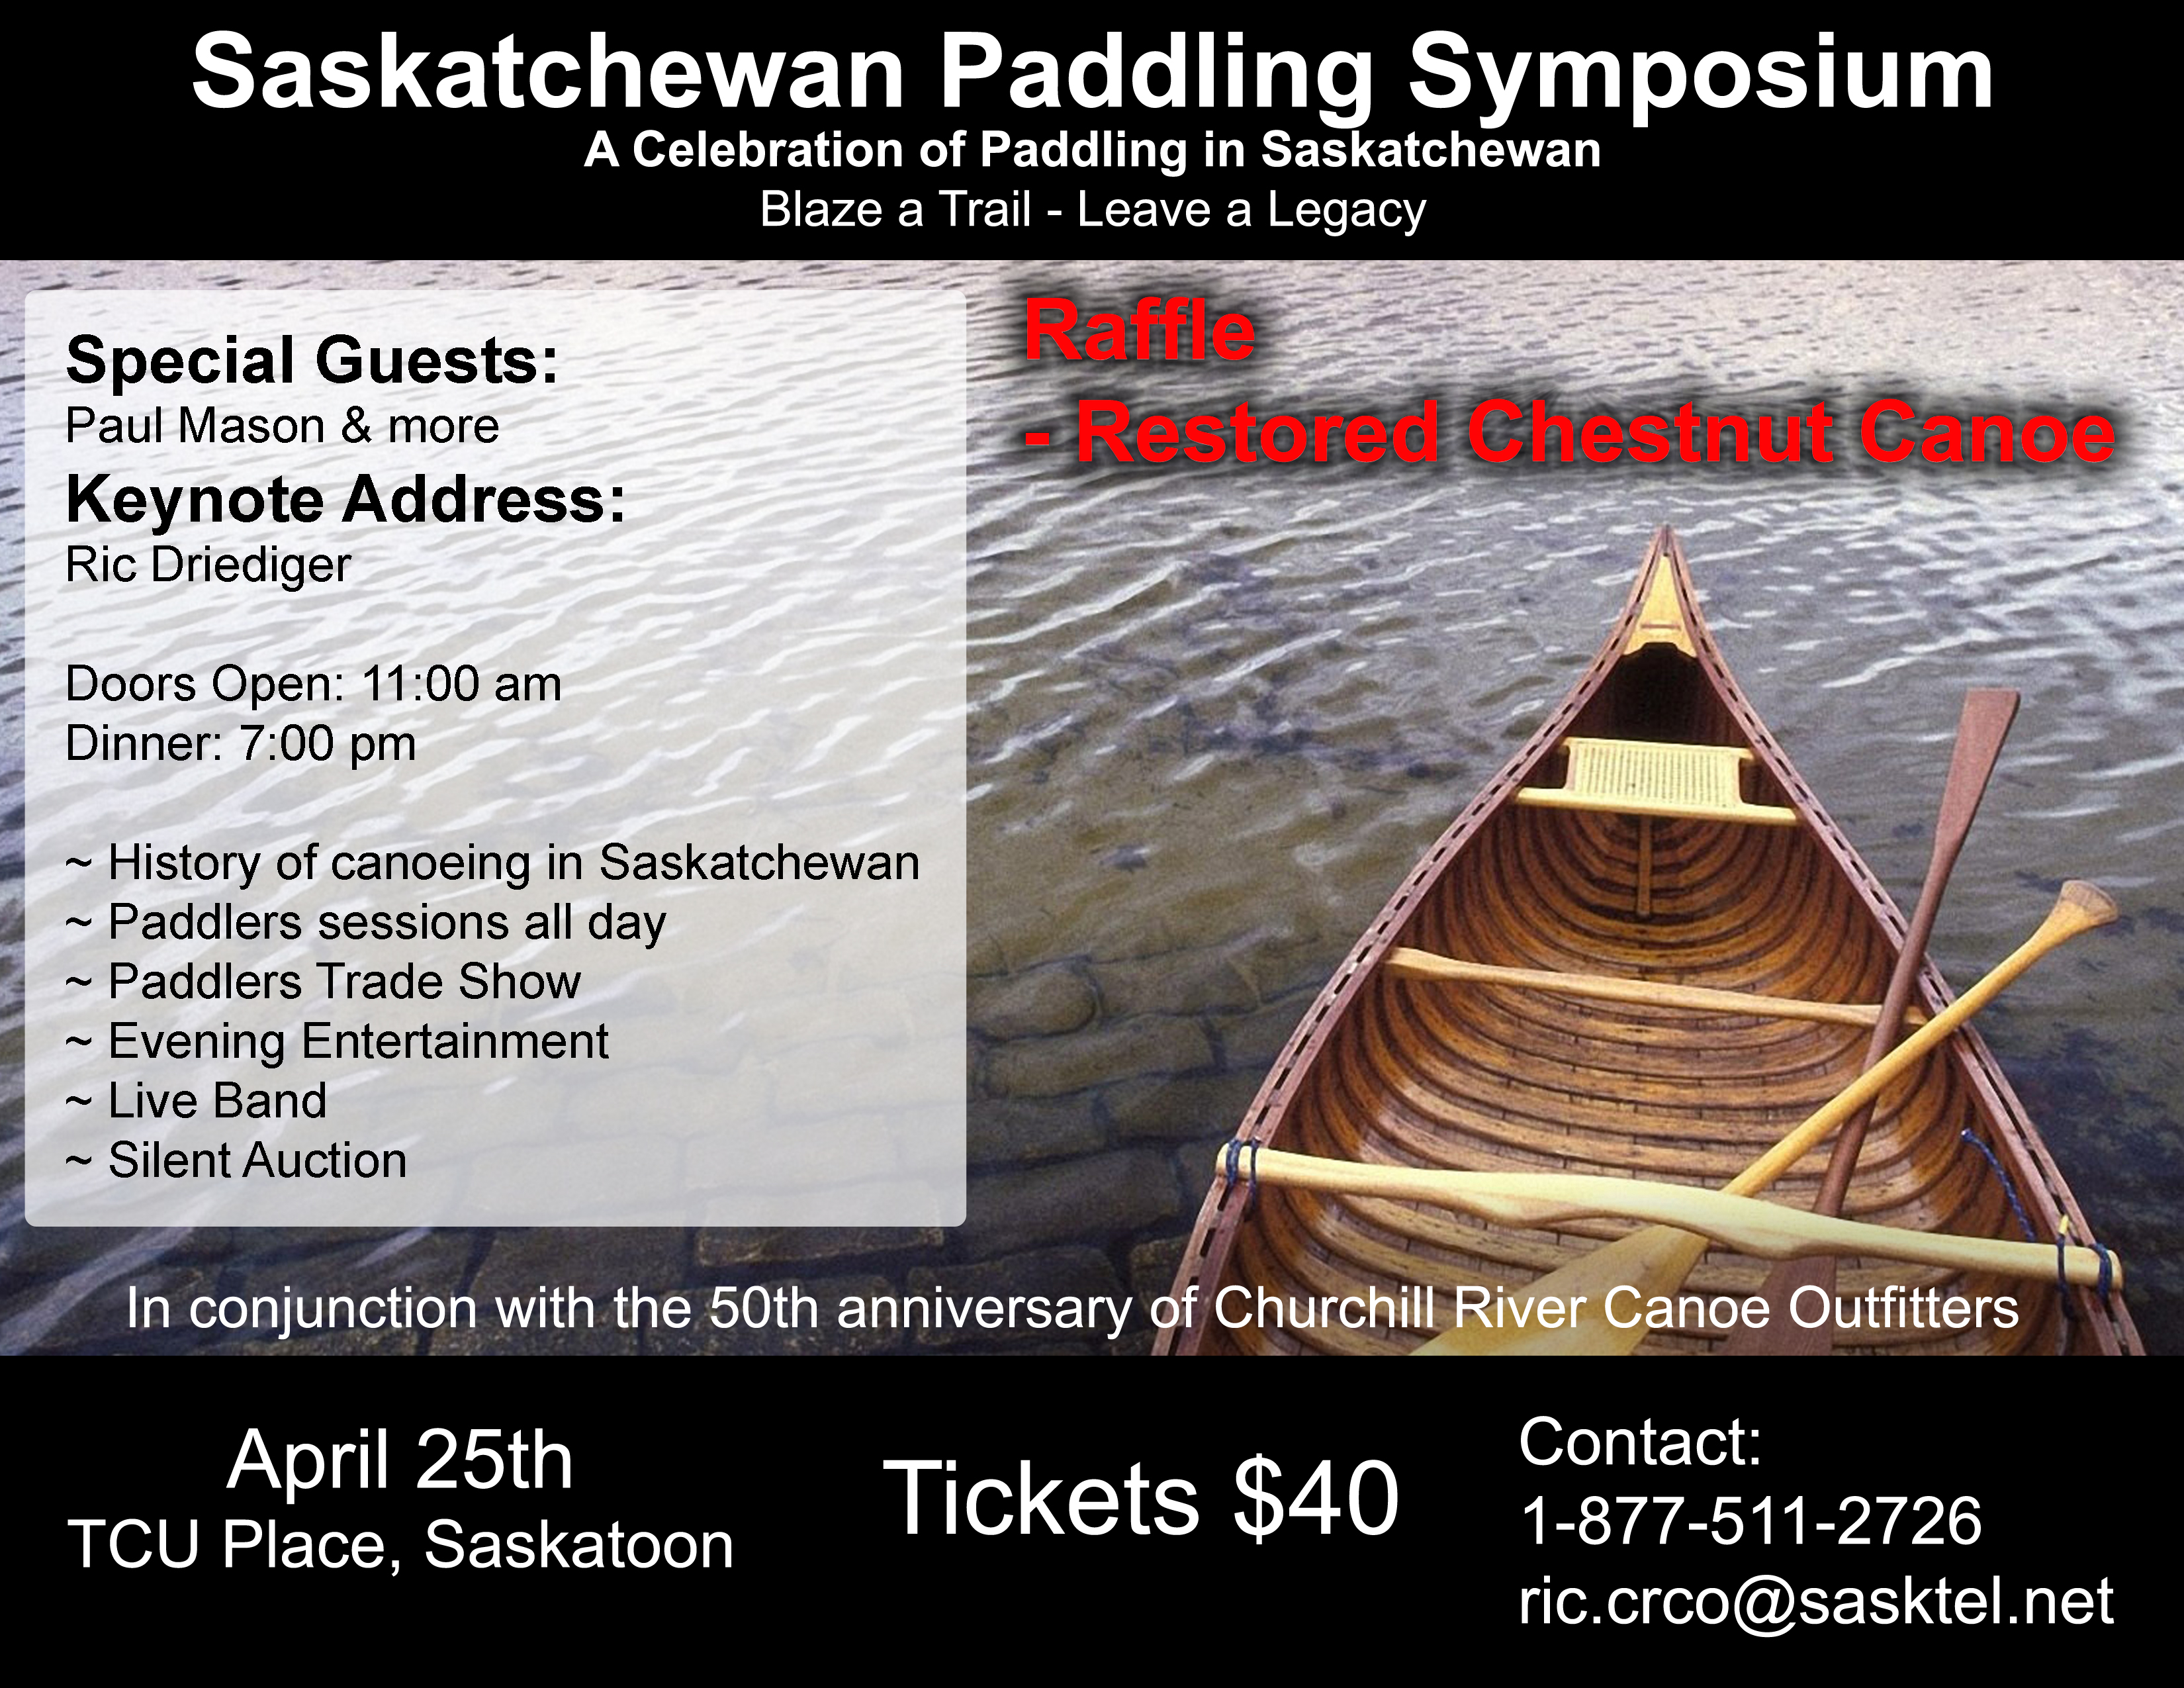 Sask Paddling Symposium poster: canoe, paddleboard, kayak